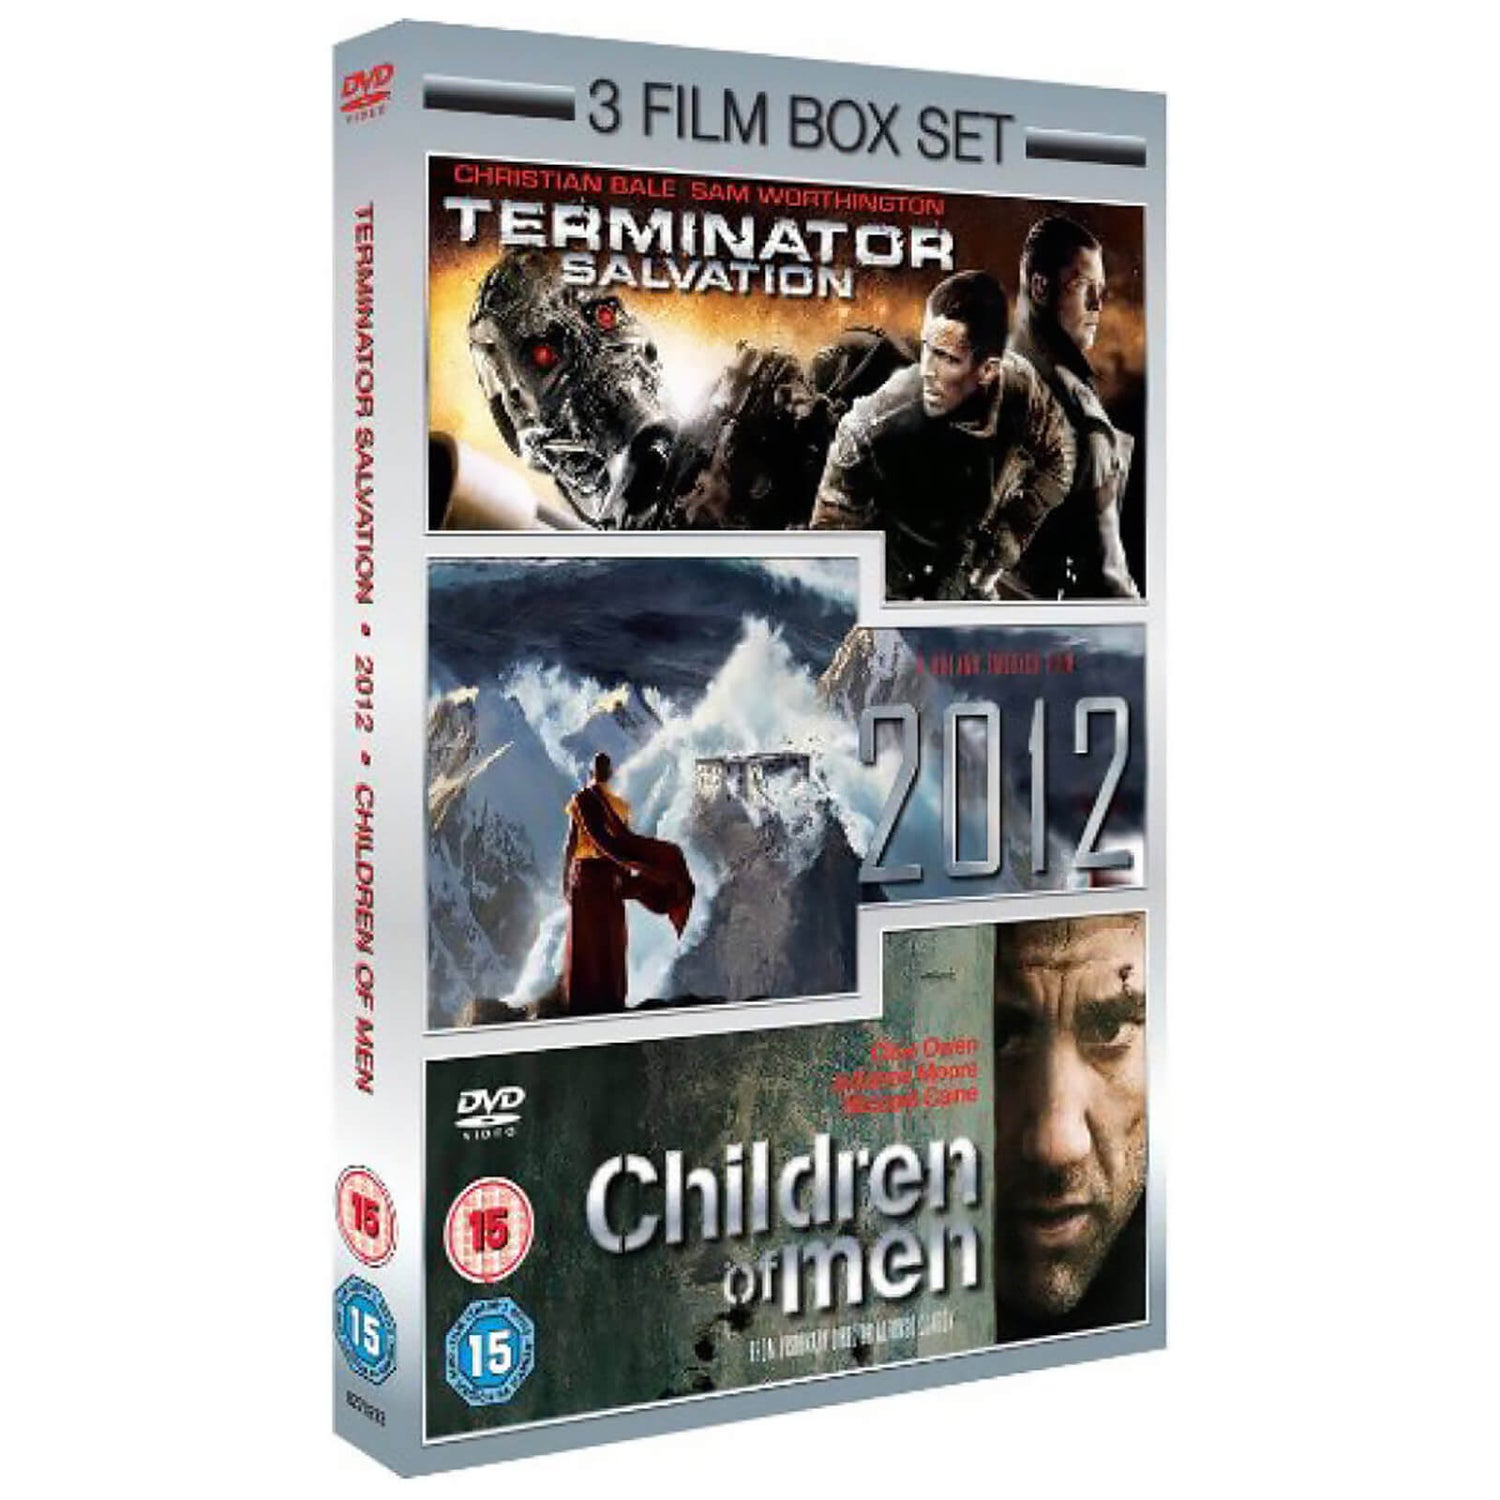 2012 / Terminator Salvation / Children of Men